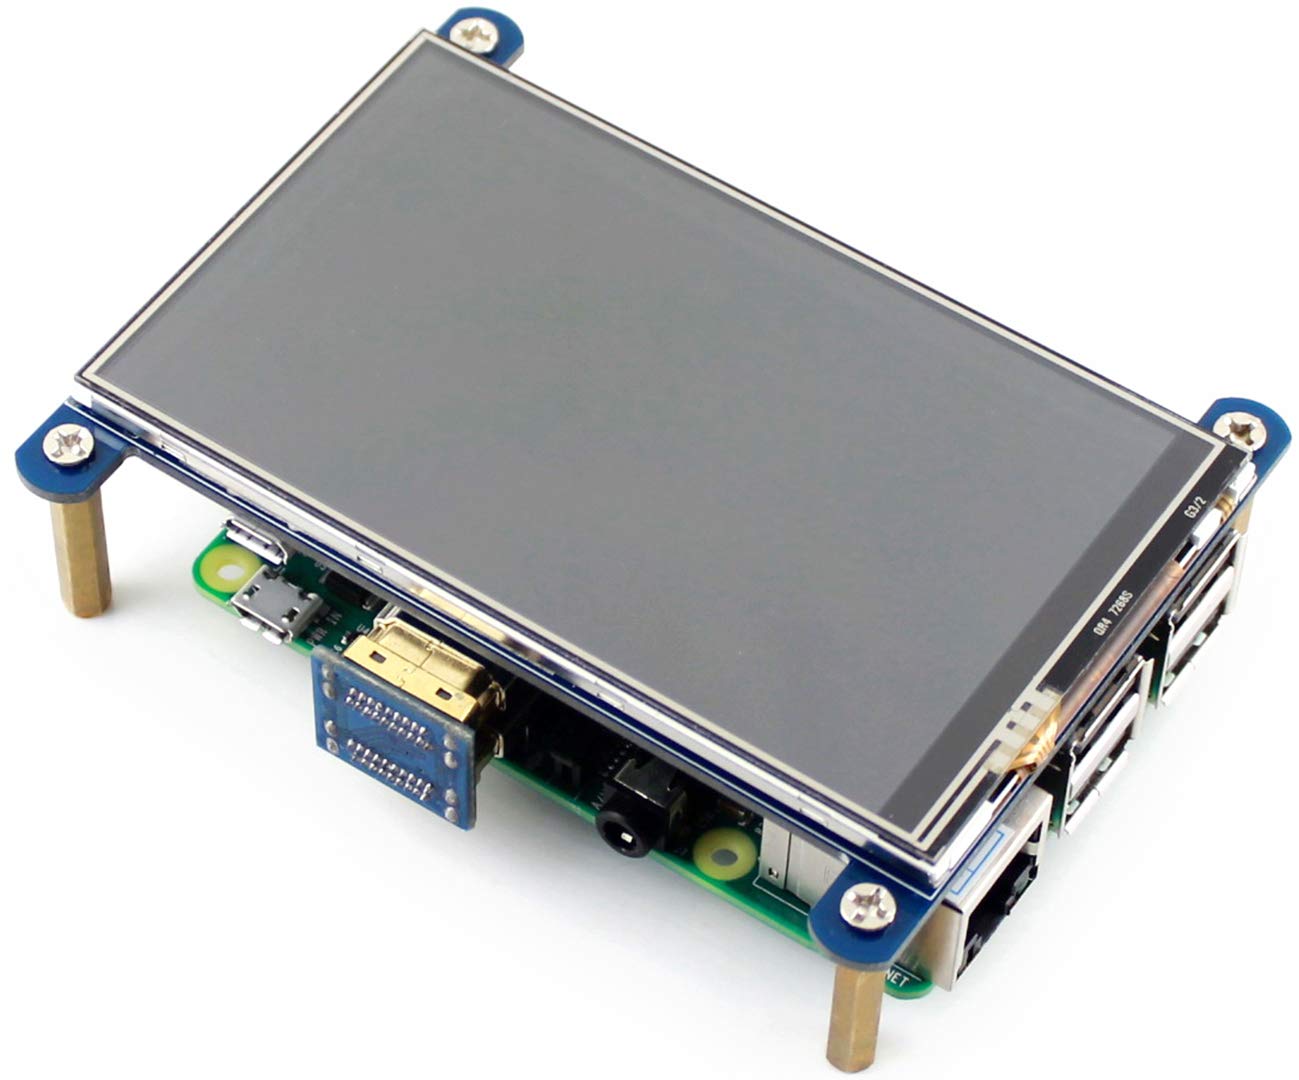 waveshare 4 inch HDMI LCD IPS Display 800x480 Resolution Resistive Touch Screen Interface for Raspberry Pi 4 B/3 B/3 B+/2 B/B+/B Zero W